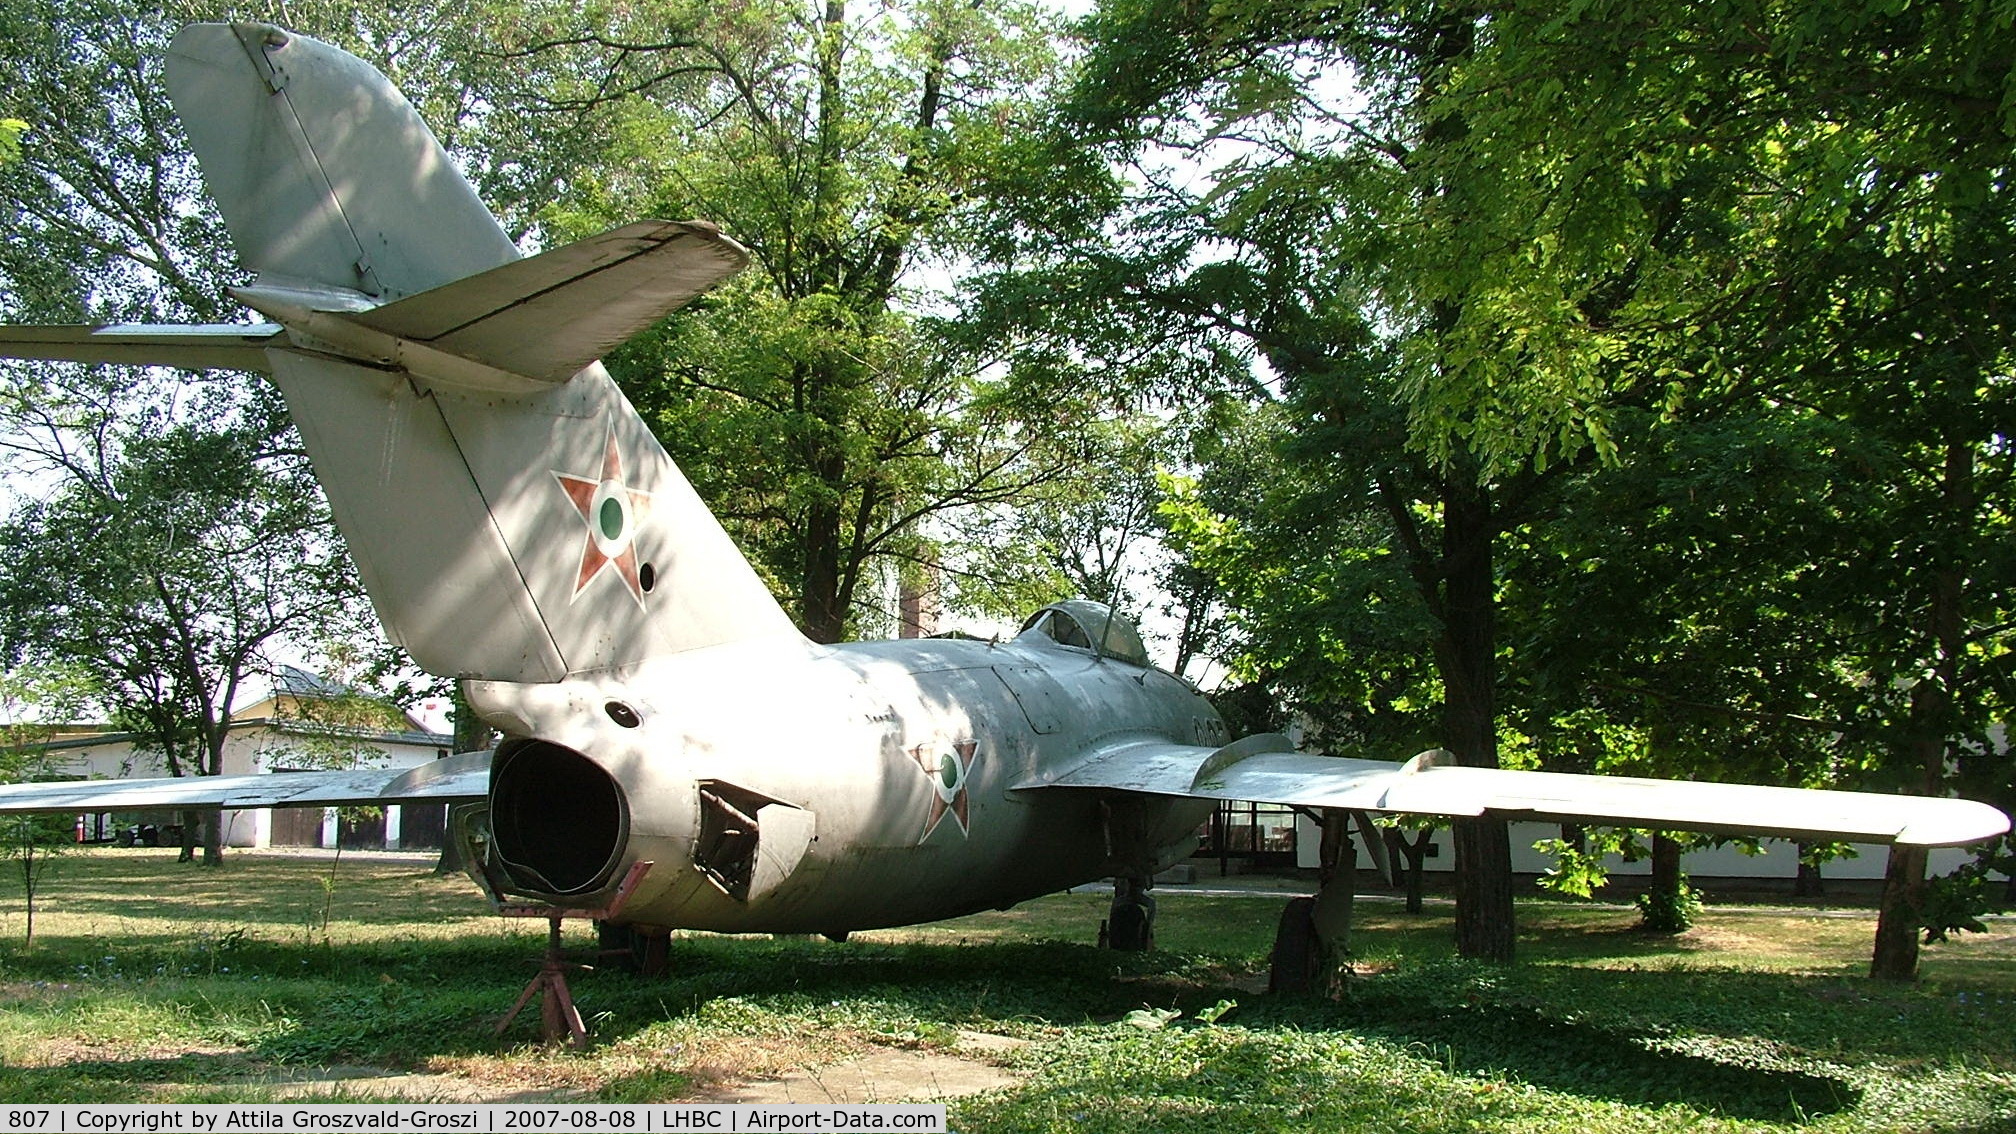 807, 1951 Mikoyan-Gurevich MiG-15 C/N 0807, Békéscsaba Airport, Hungary. After 1969, scrapping, on display at the airport.